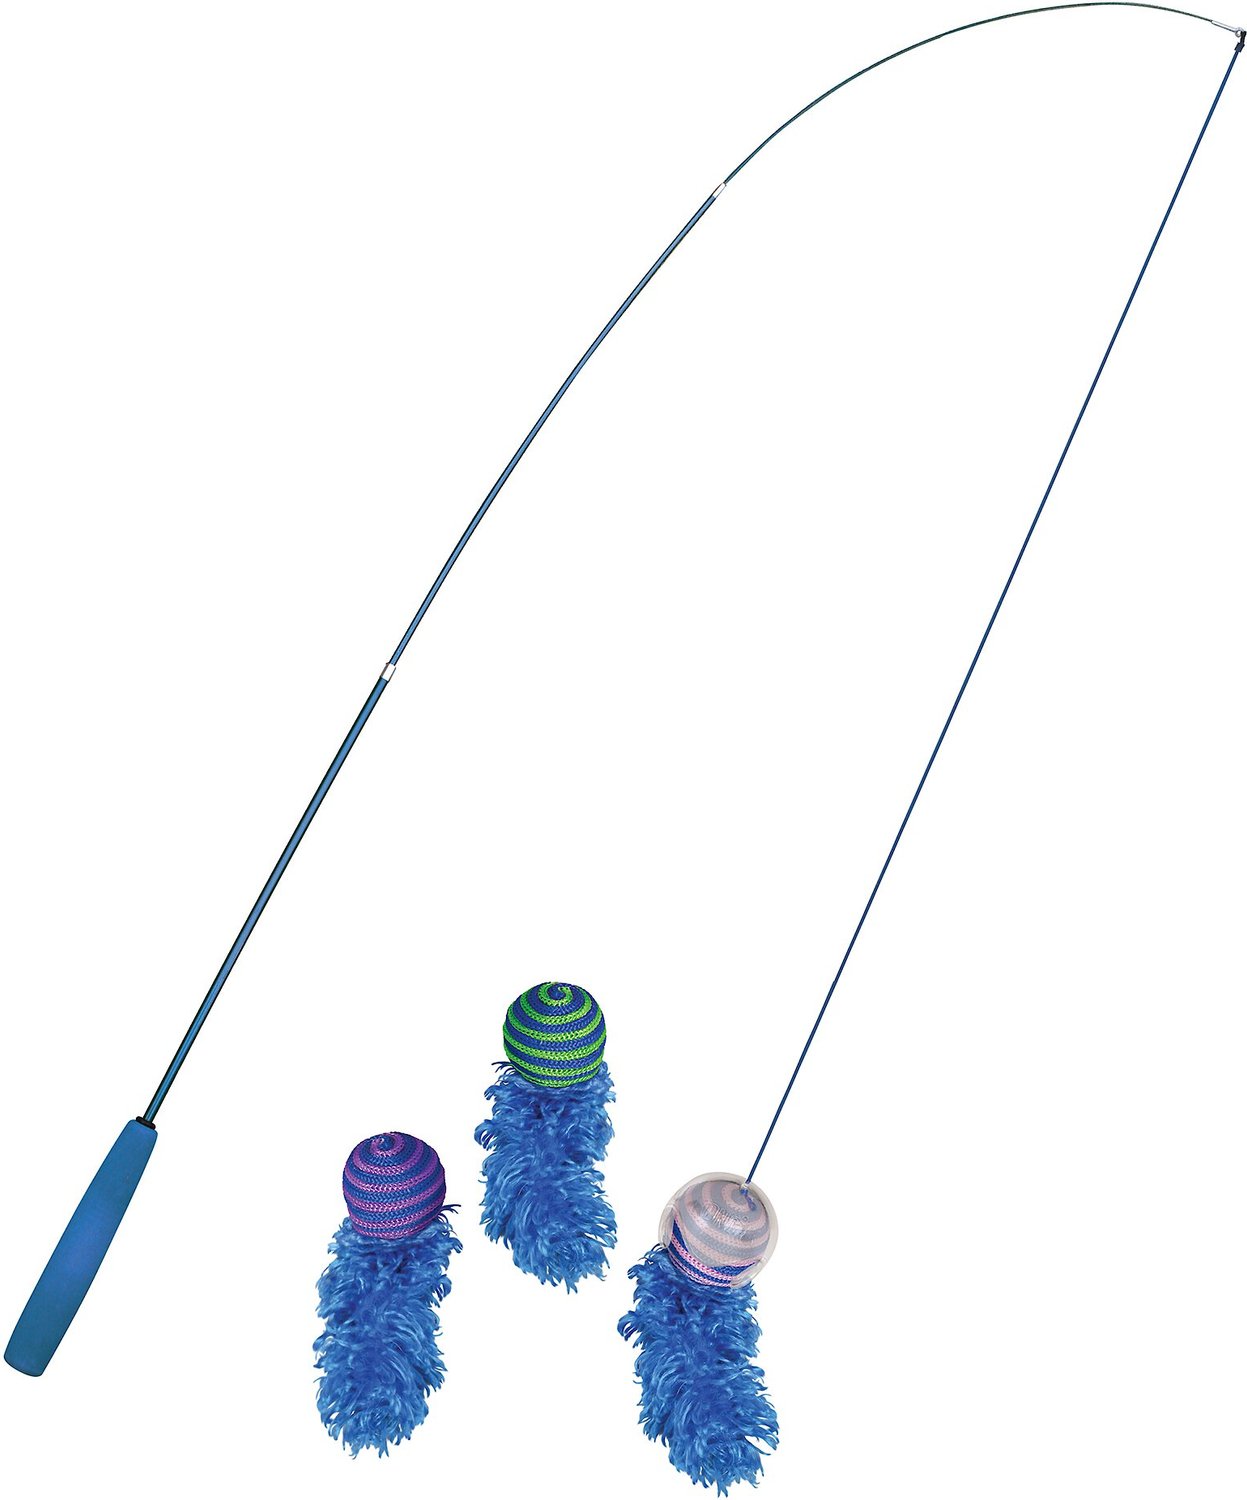 fishing pole cat toy